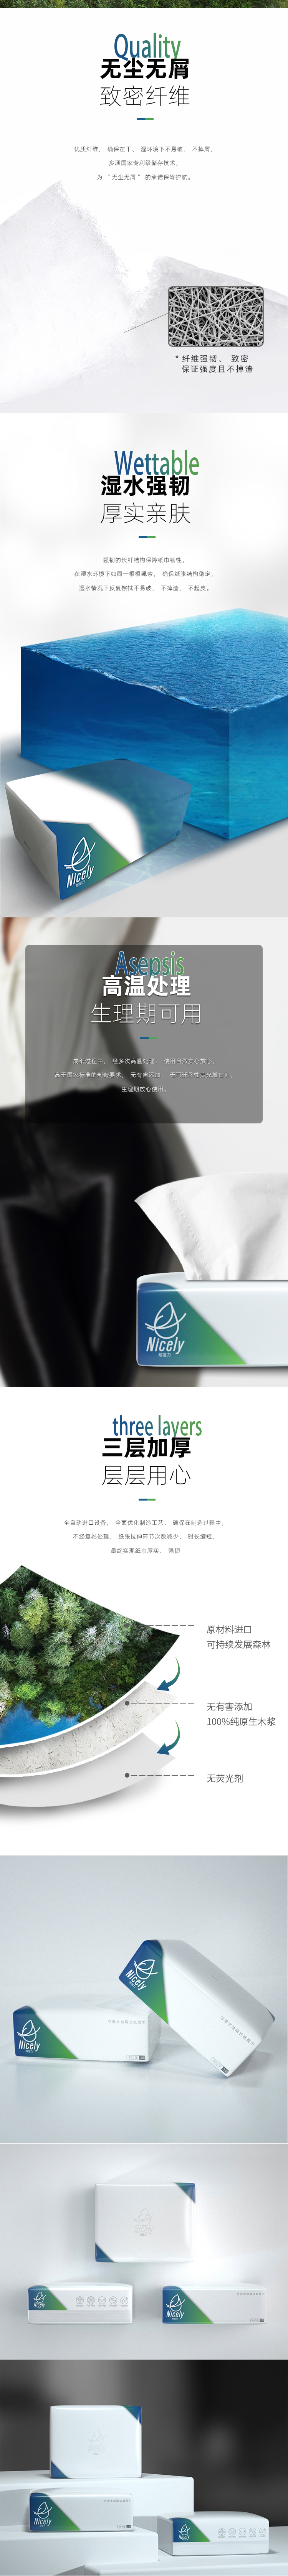 Hanky亨奇品牌-可湿水纸面巾耐湿力Nicely包装&电商设计图5